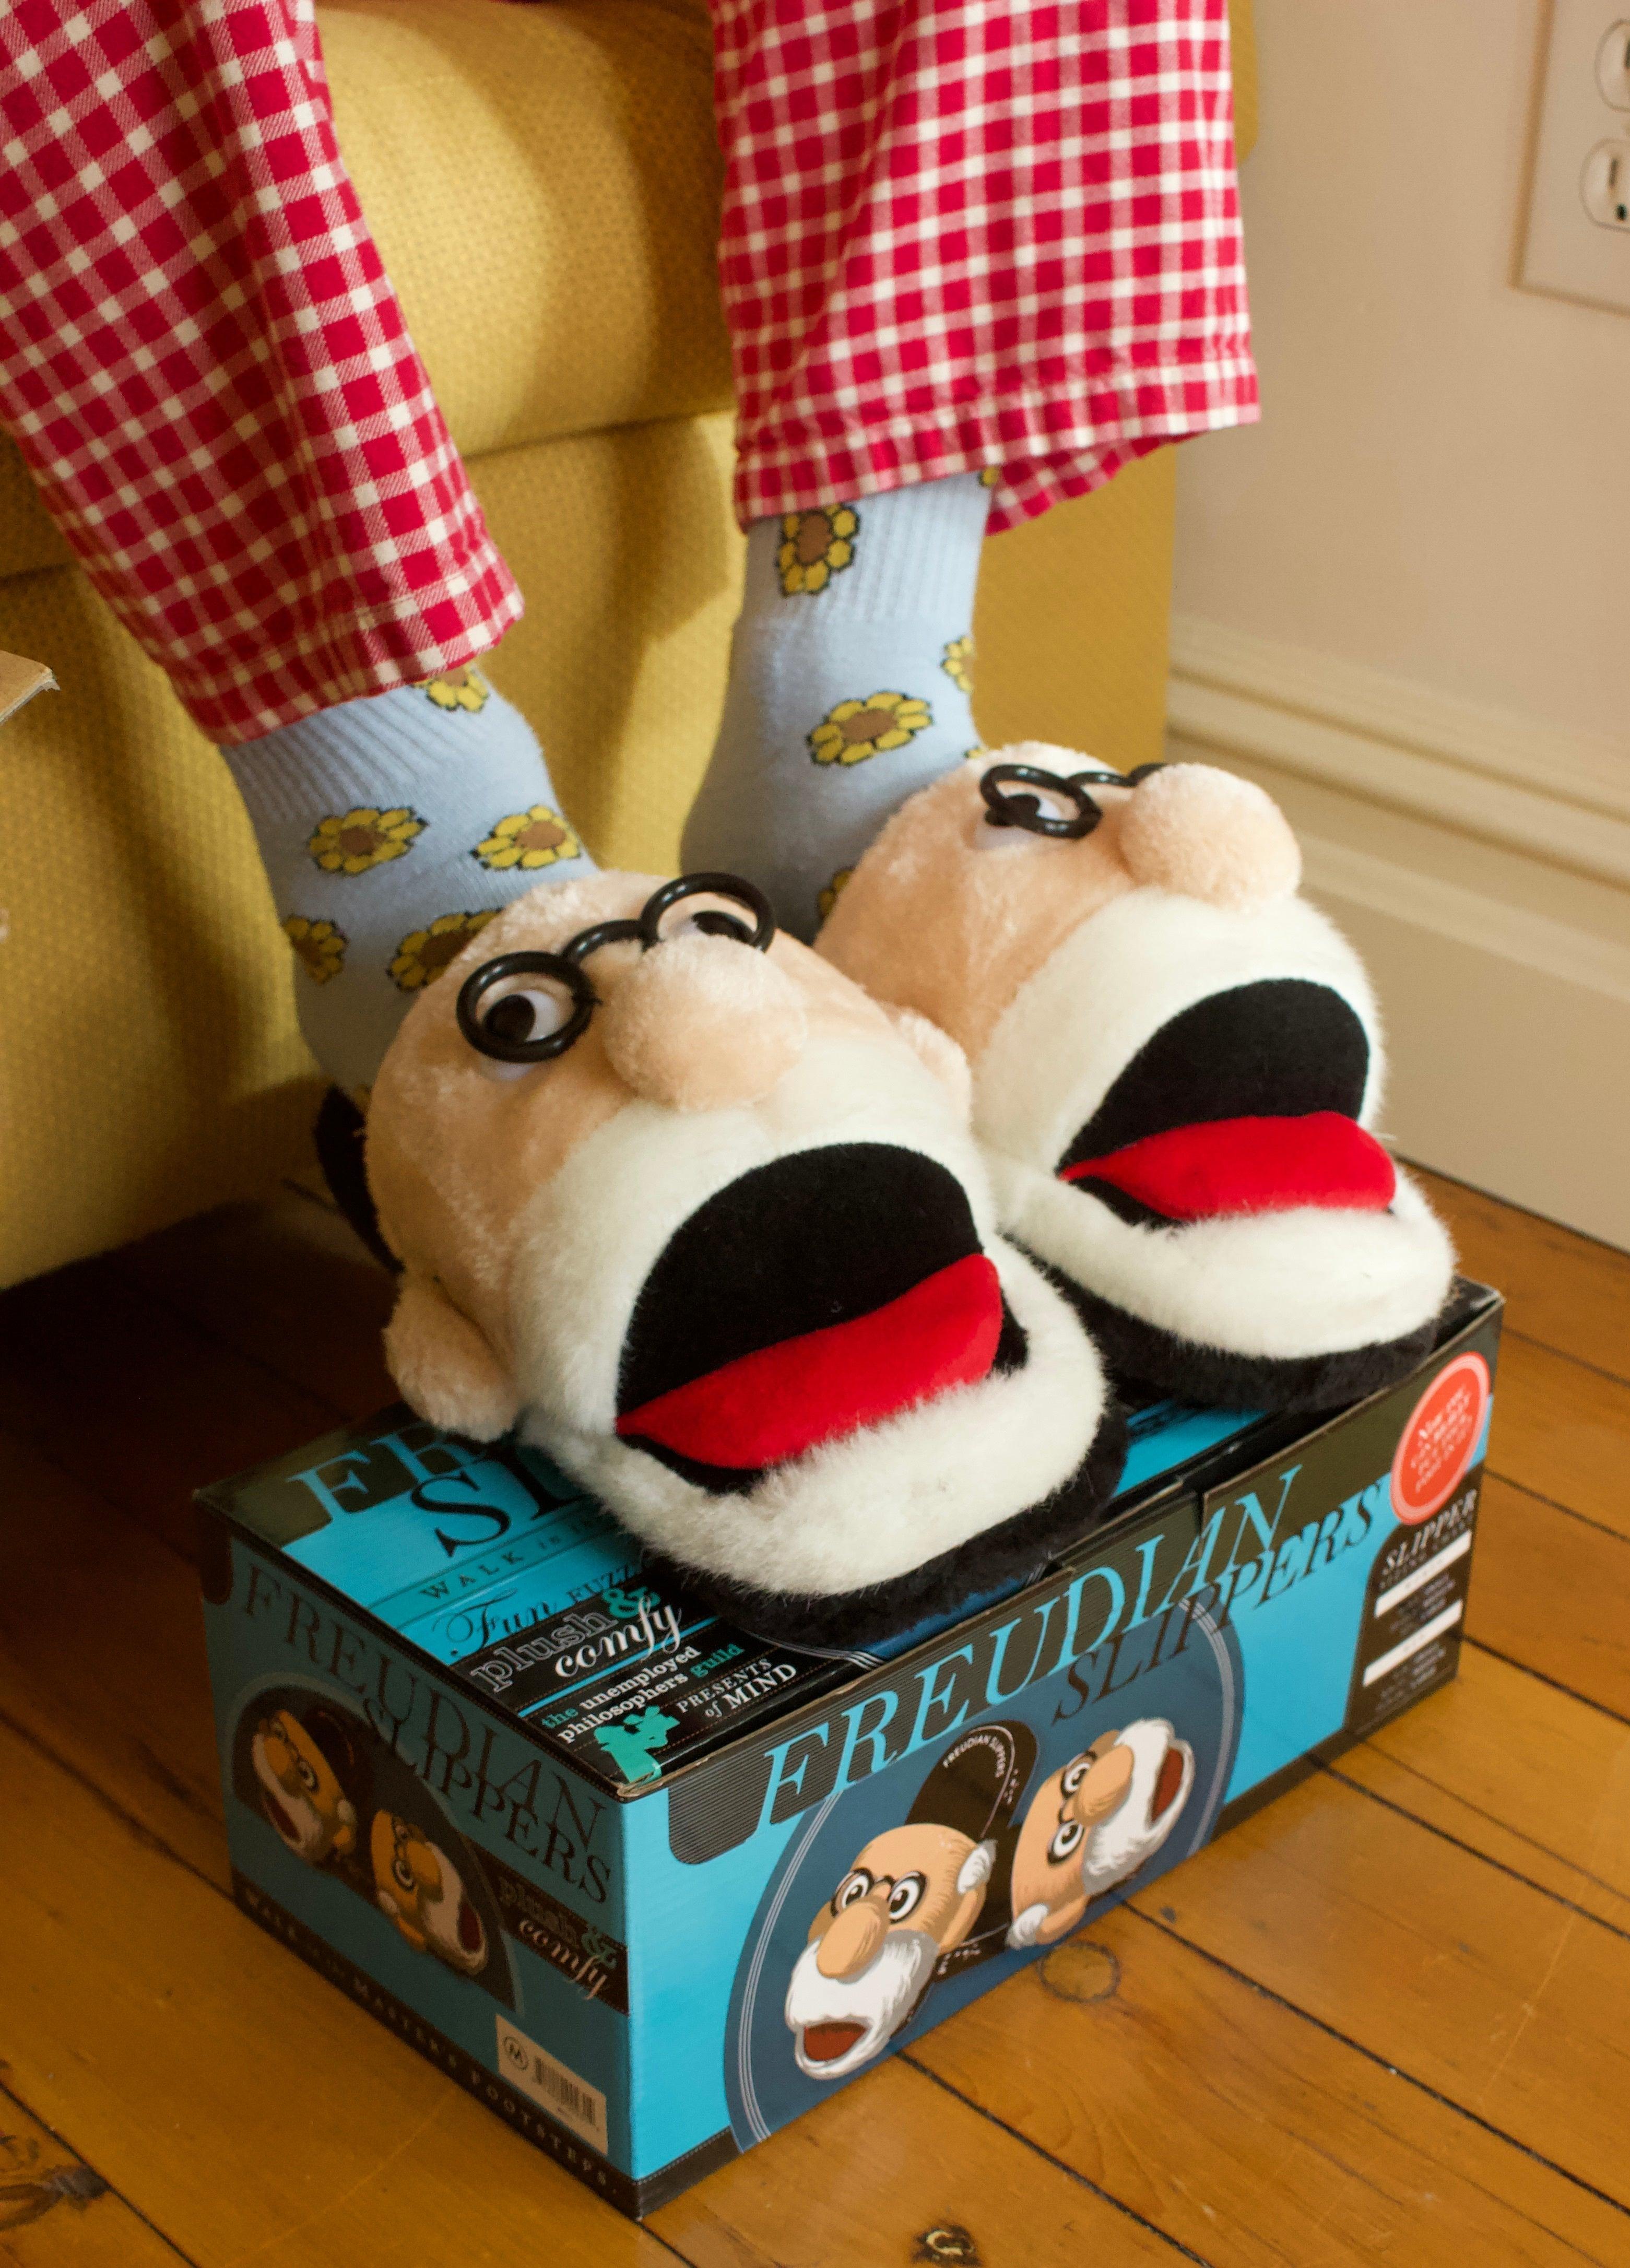 Amazon.com: Wishpets Stuffed Animal - Soft Plush Toy for Kids - 15